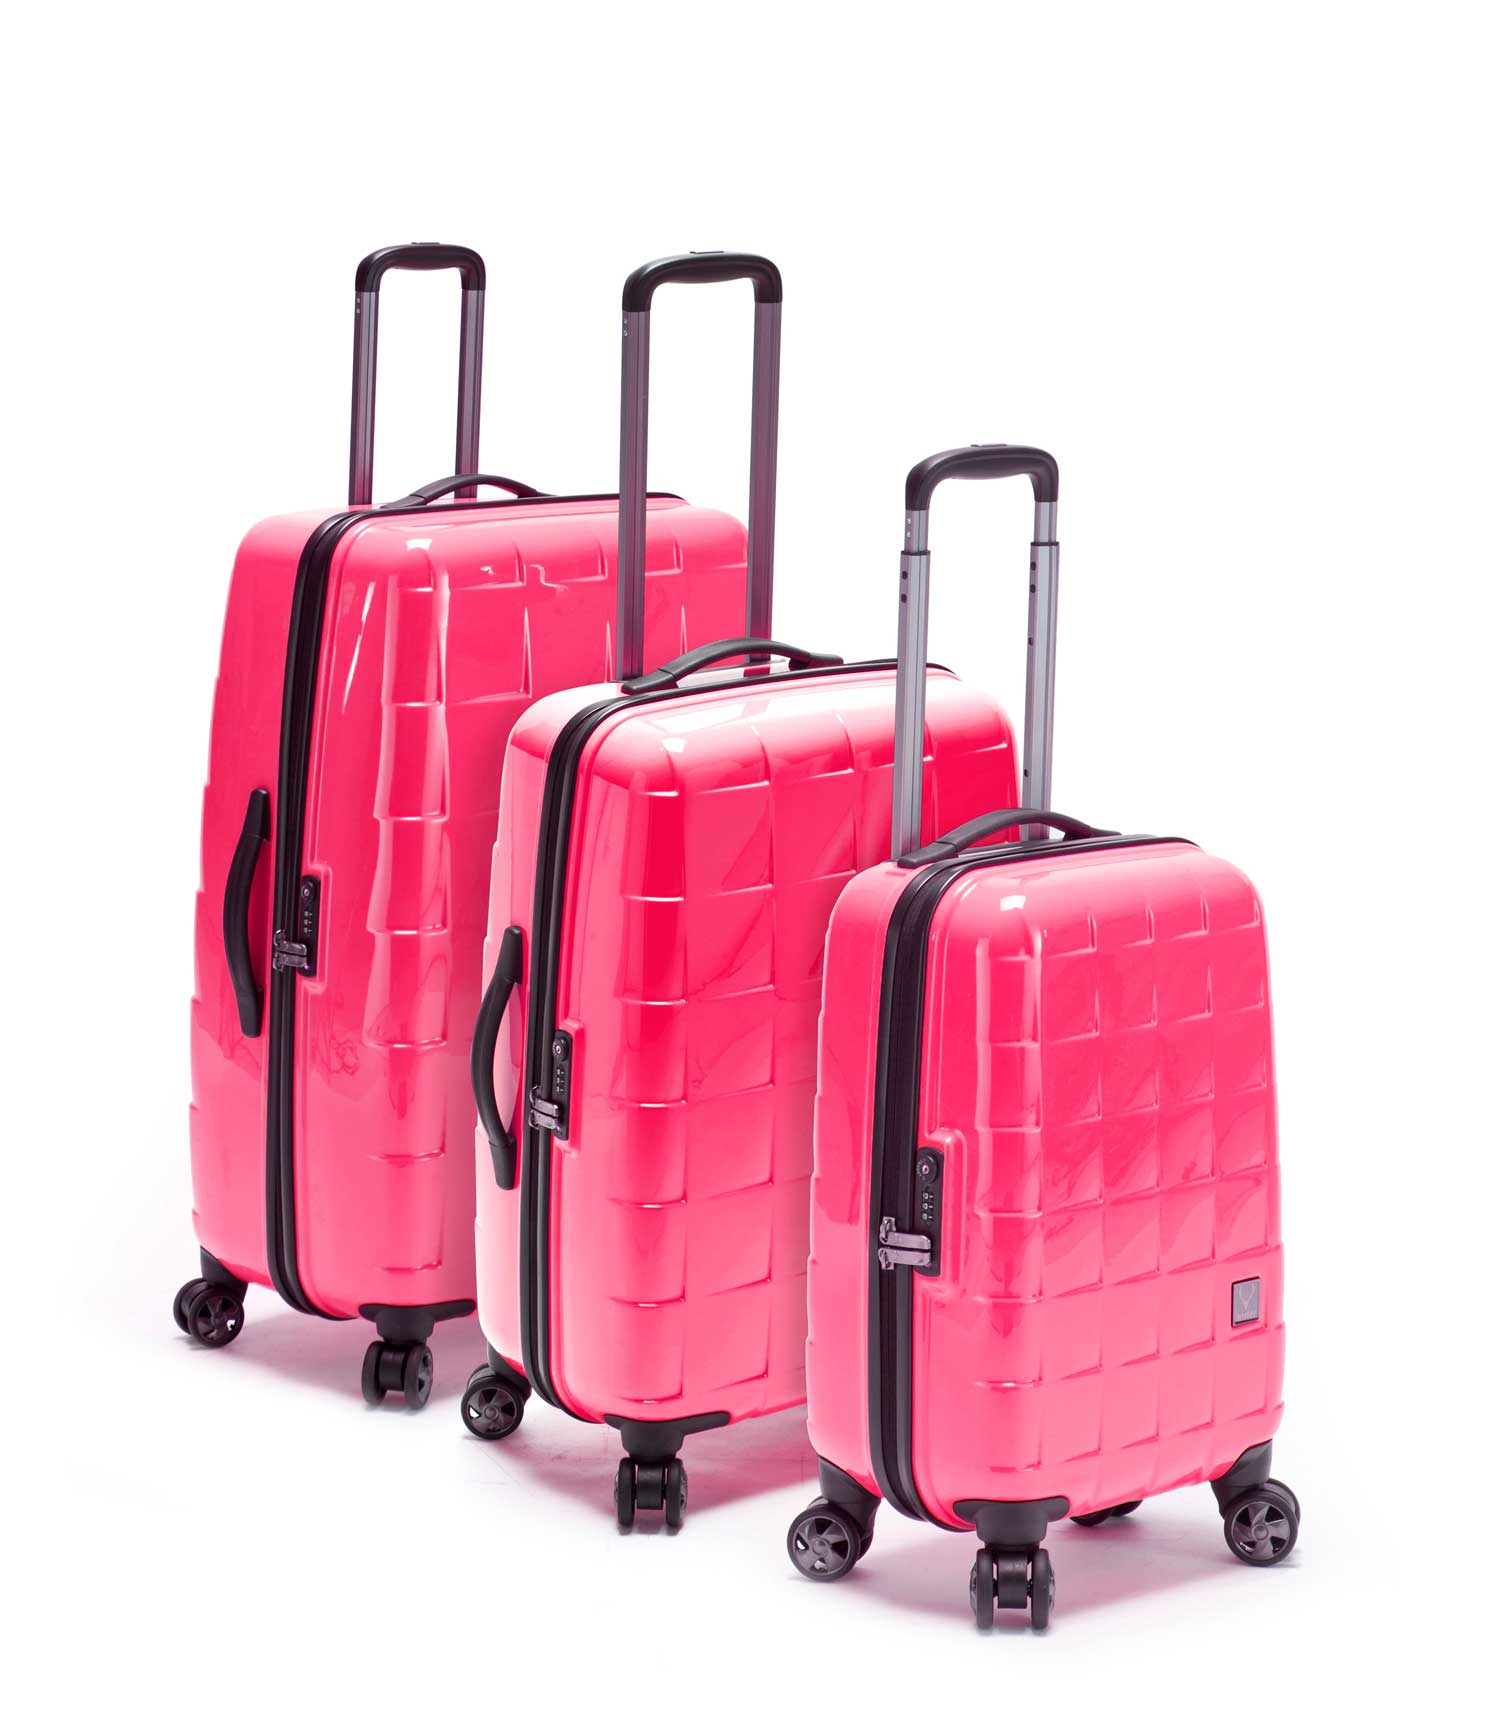 Girdle luggage strap 96b155, hand carry luggage size dragon air vietnam ...